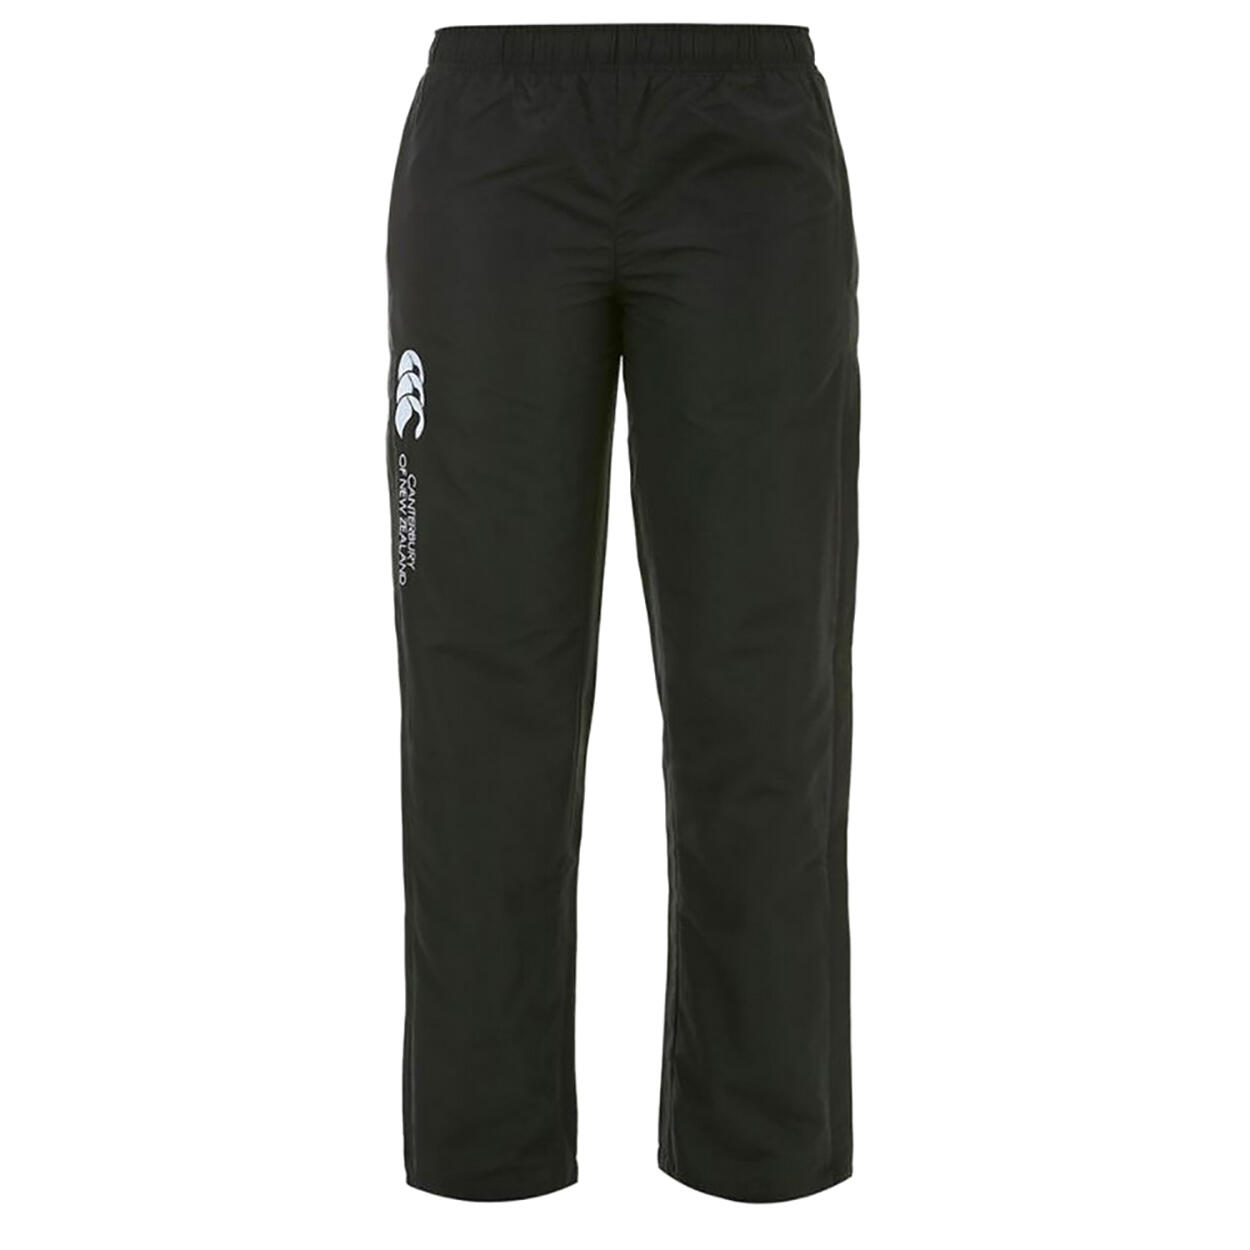 CANTERBURY Womens/Ladies Stadium Elasticated Sports Trousers (Black)